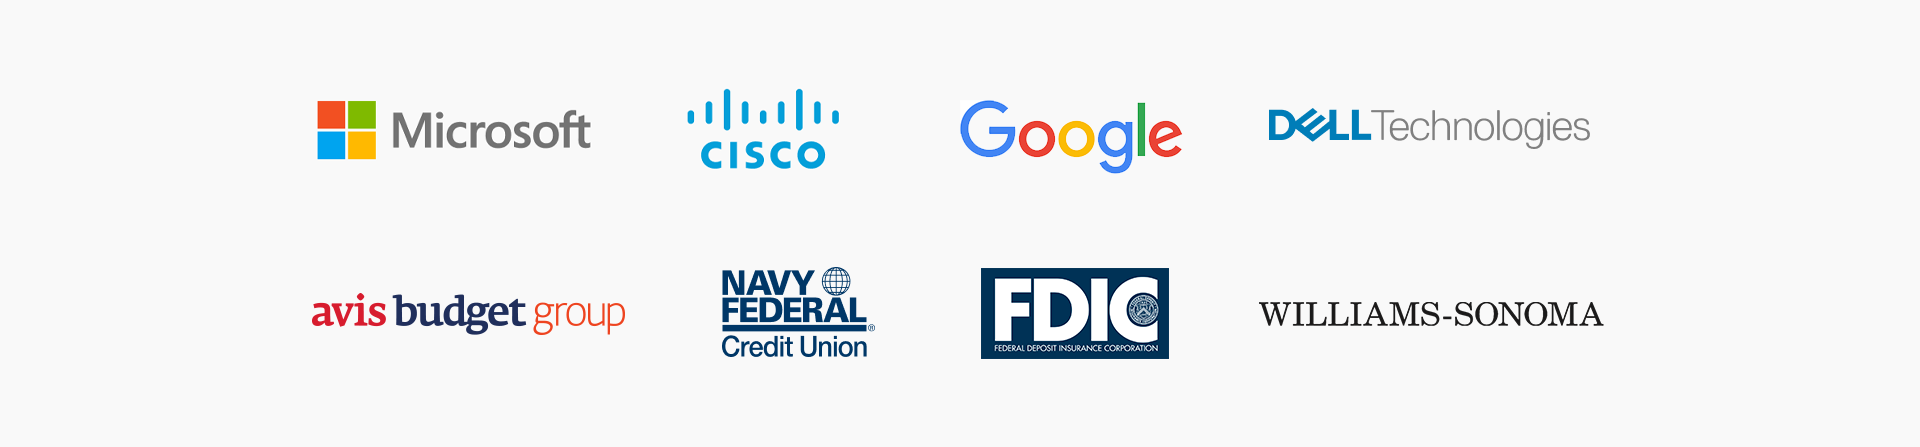 Logos block - Microsoft, Cisco, Google, Dell, Avis Budget group, Navy Federal Credit Union, FDIC, Williams Sonoma